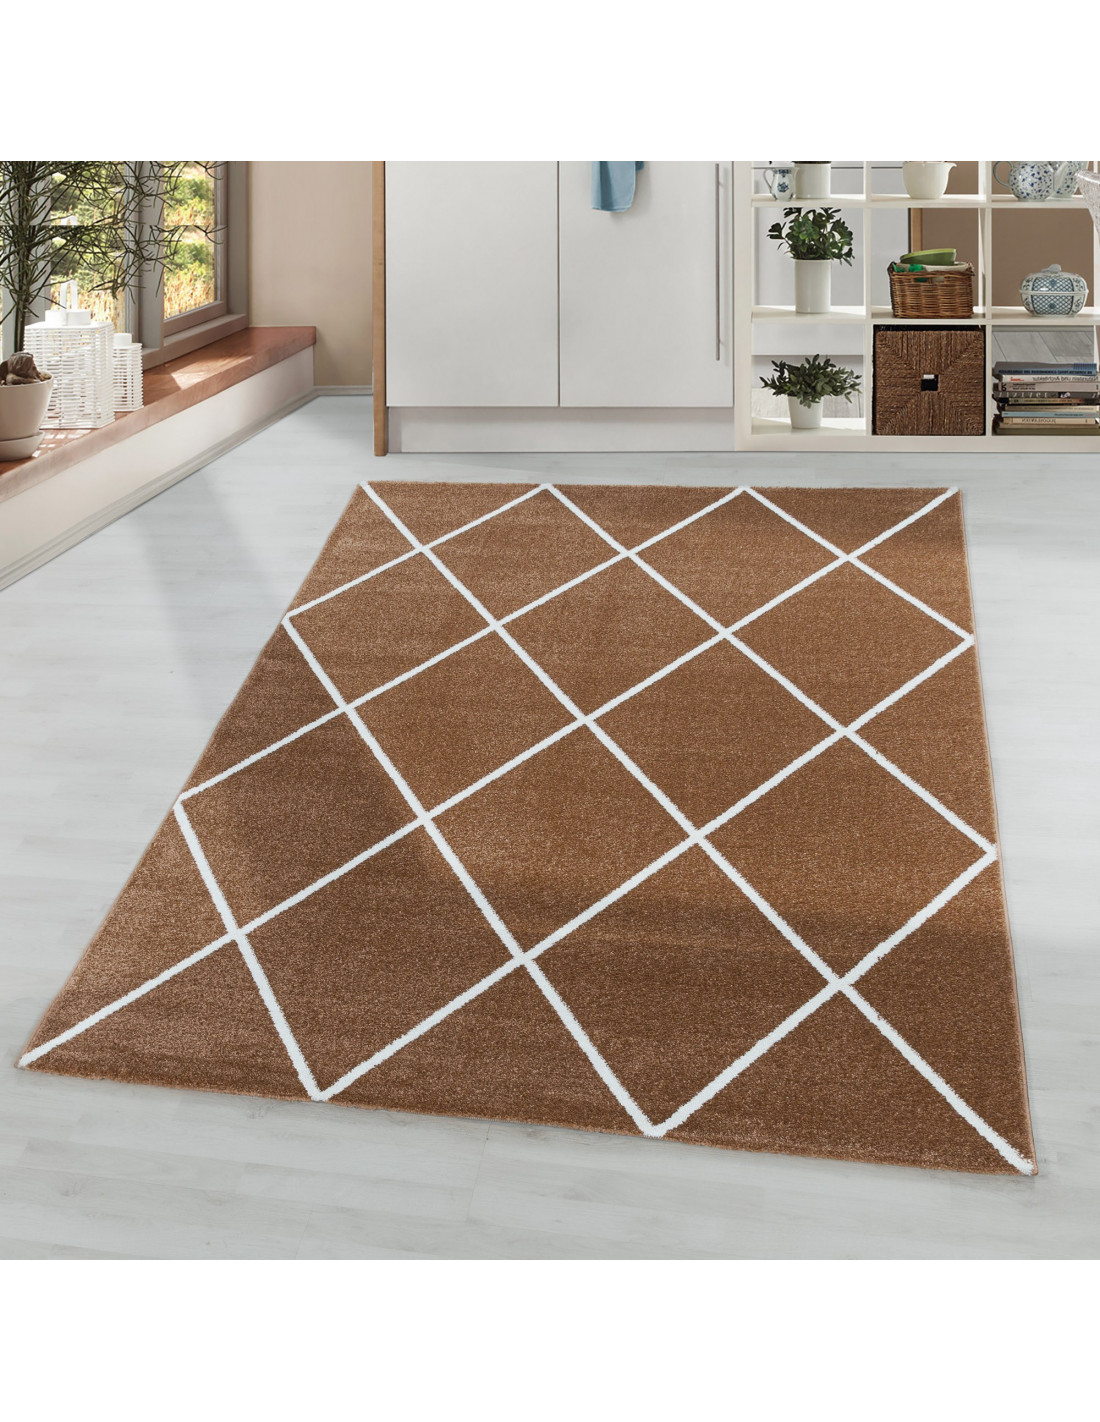 https://www.carpet1001.de/22752-thickbox_default/alfombra-pelo-corto-alfombra-salon-diseno-rombo-lineas-modernas-colores-lisos-terra.jpg